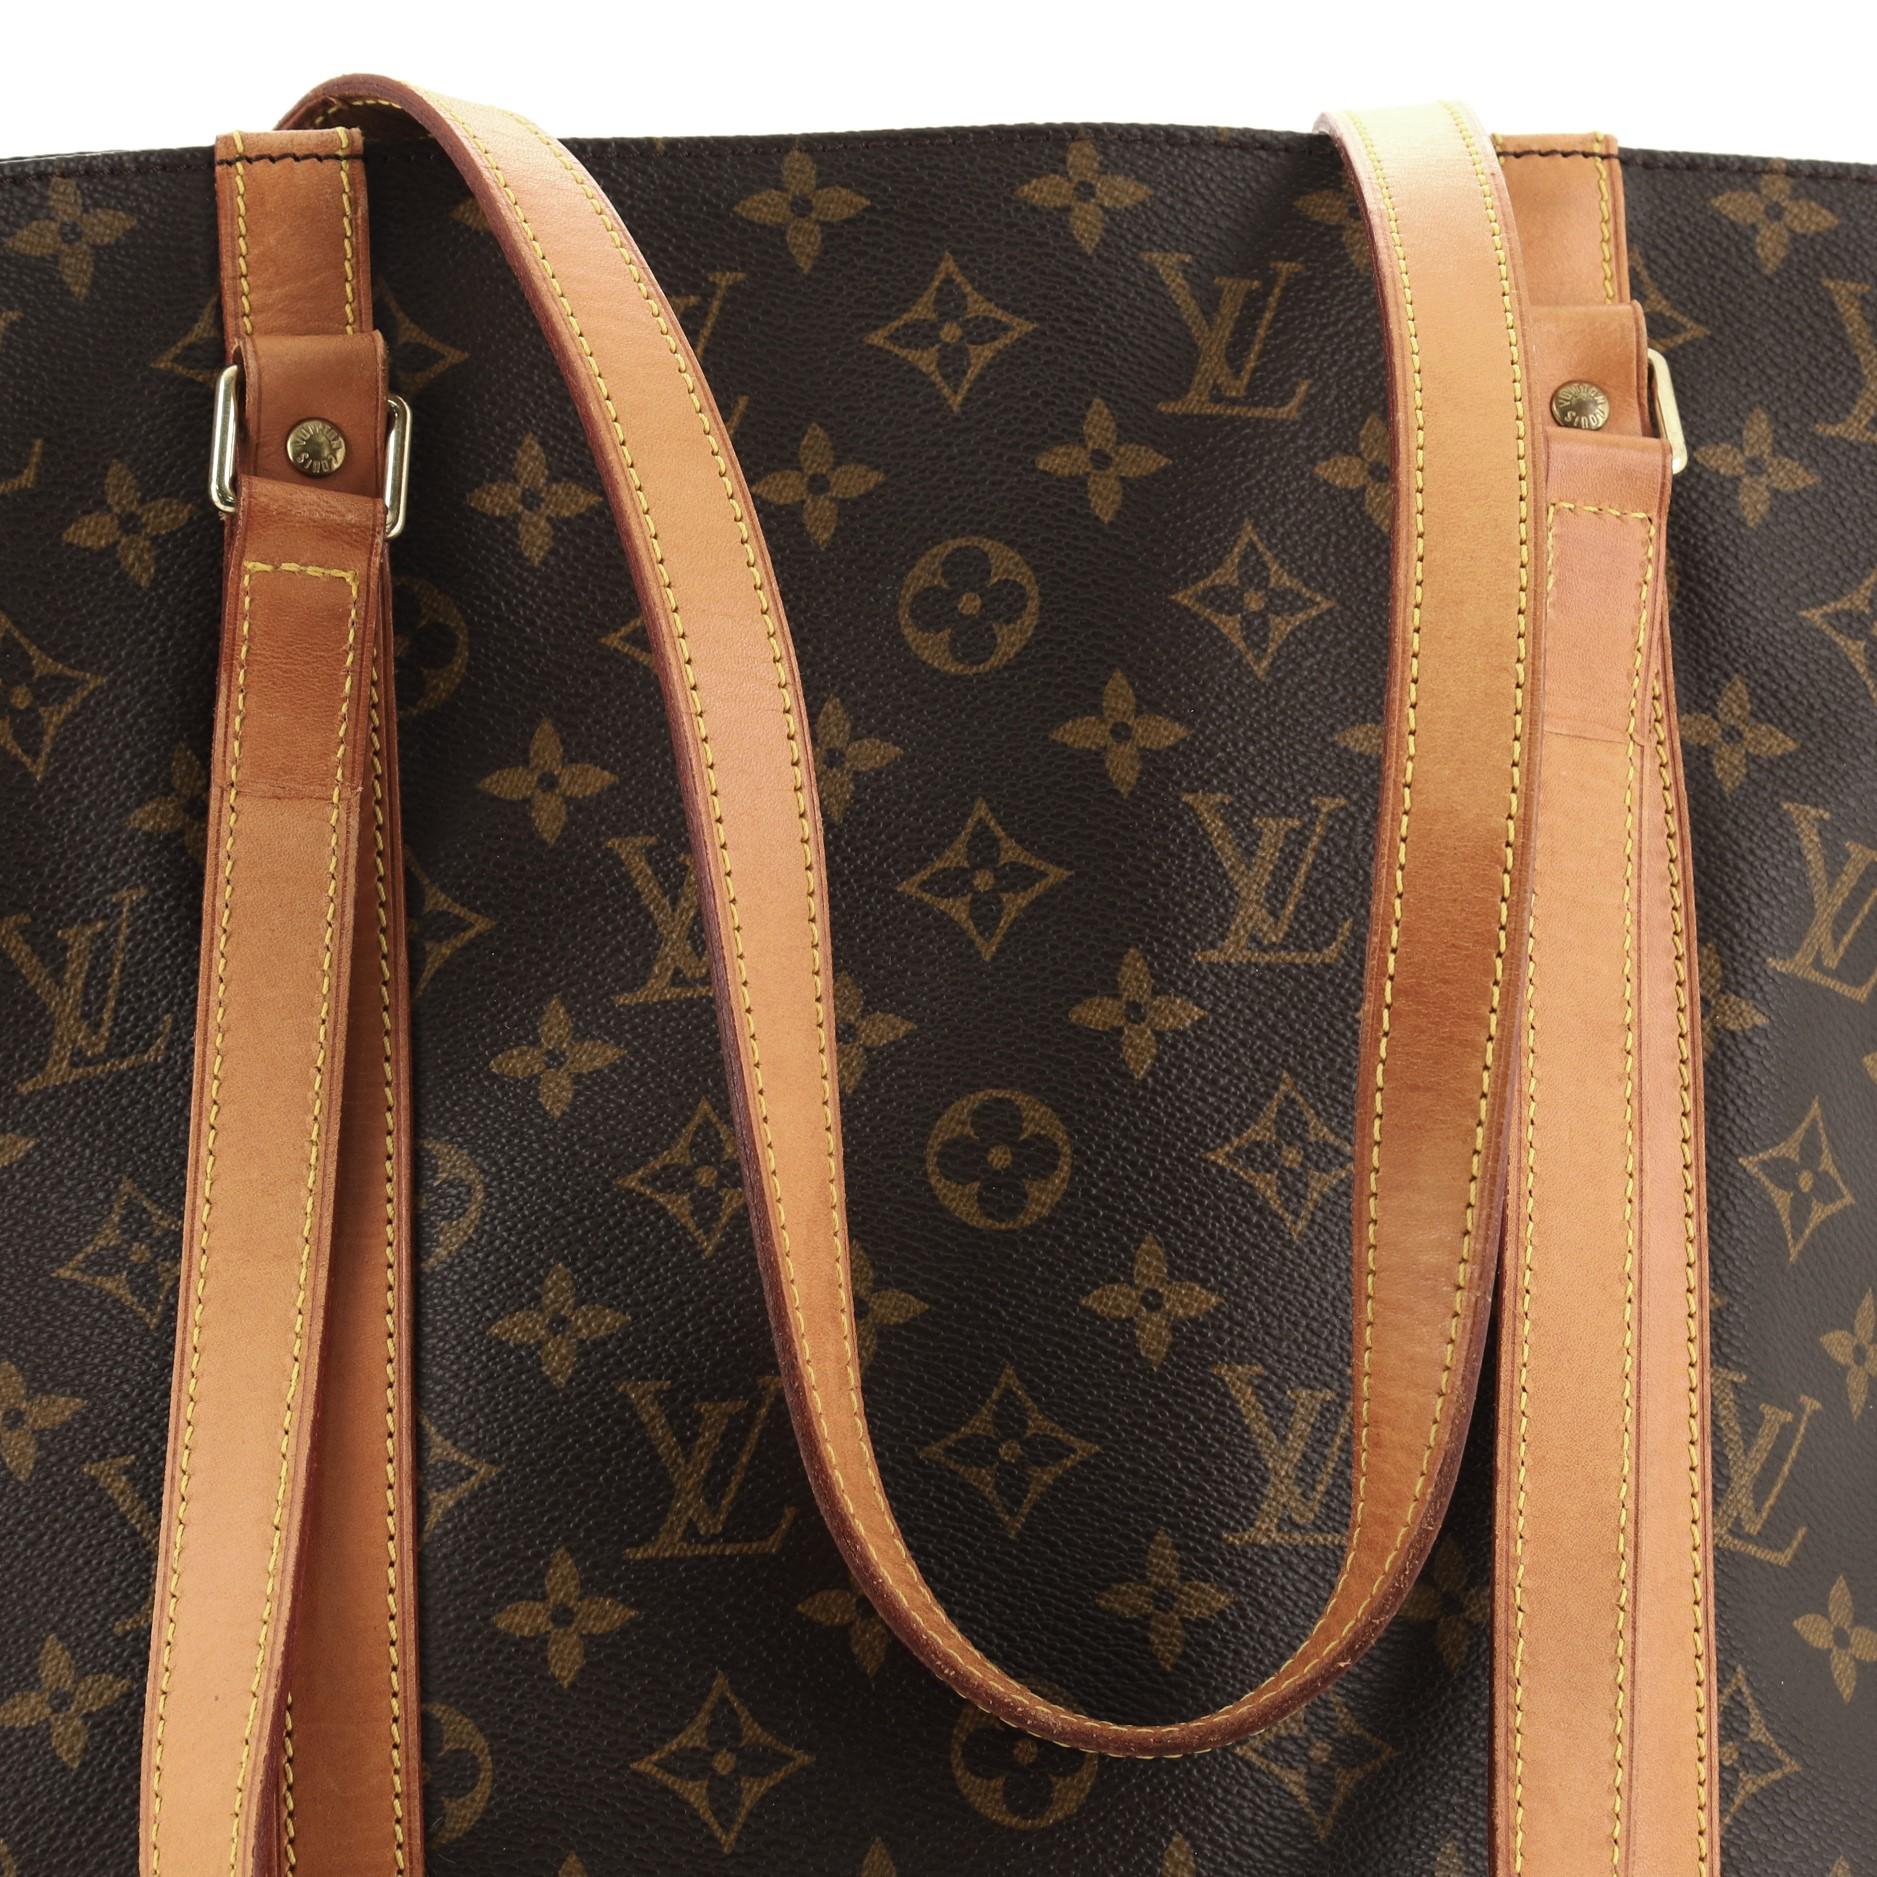  Louis Vuitton Shopping Sac Handbag Monogram Canvas MM 2